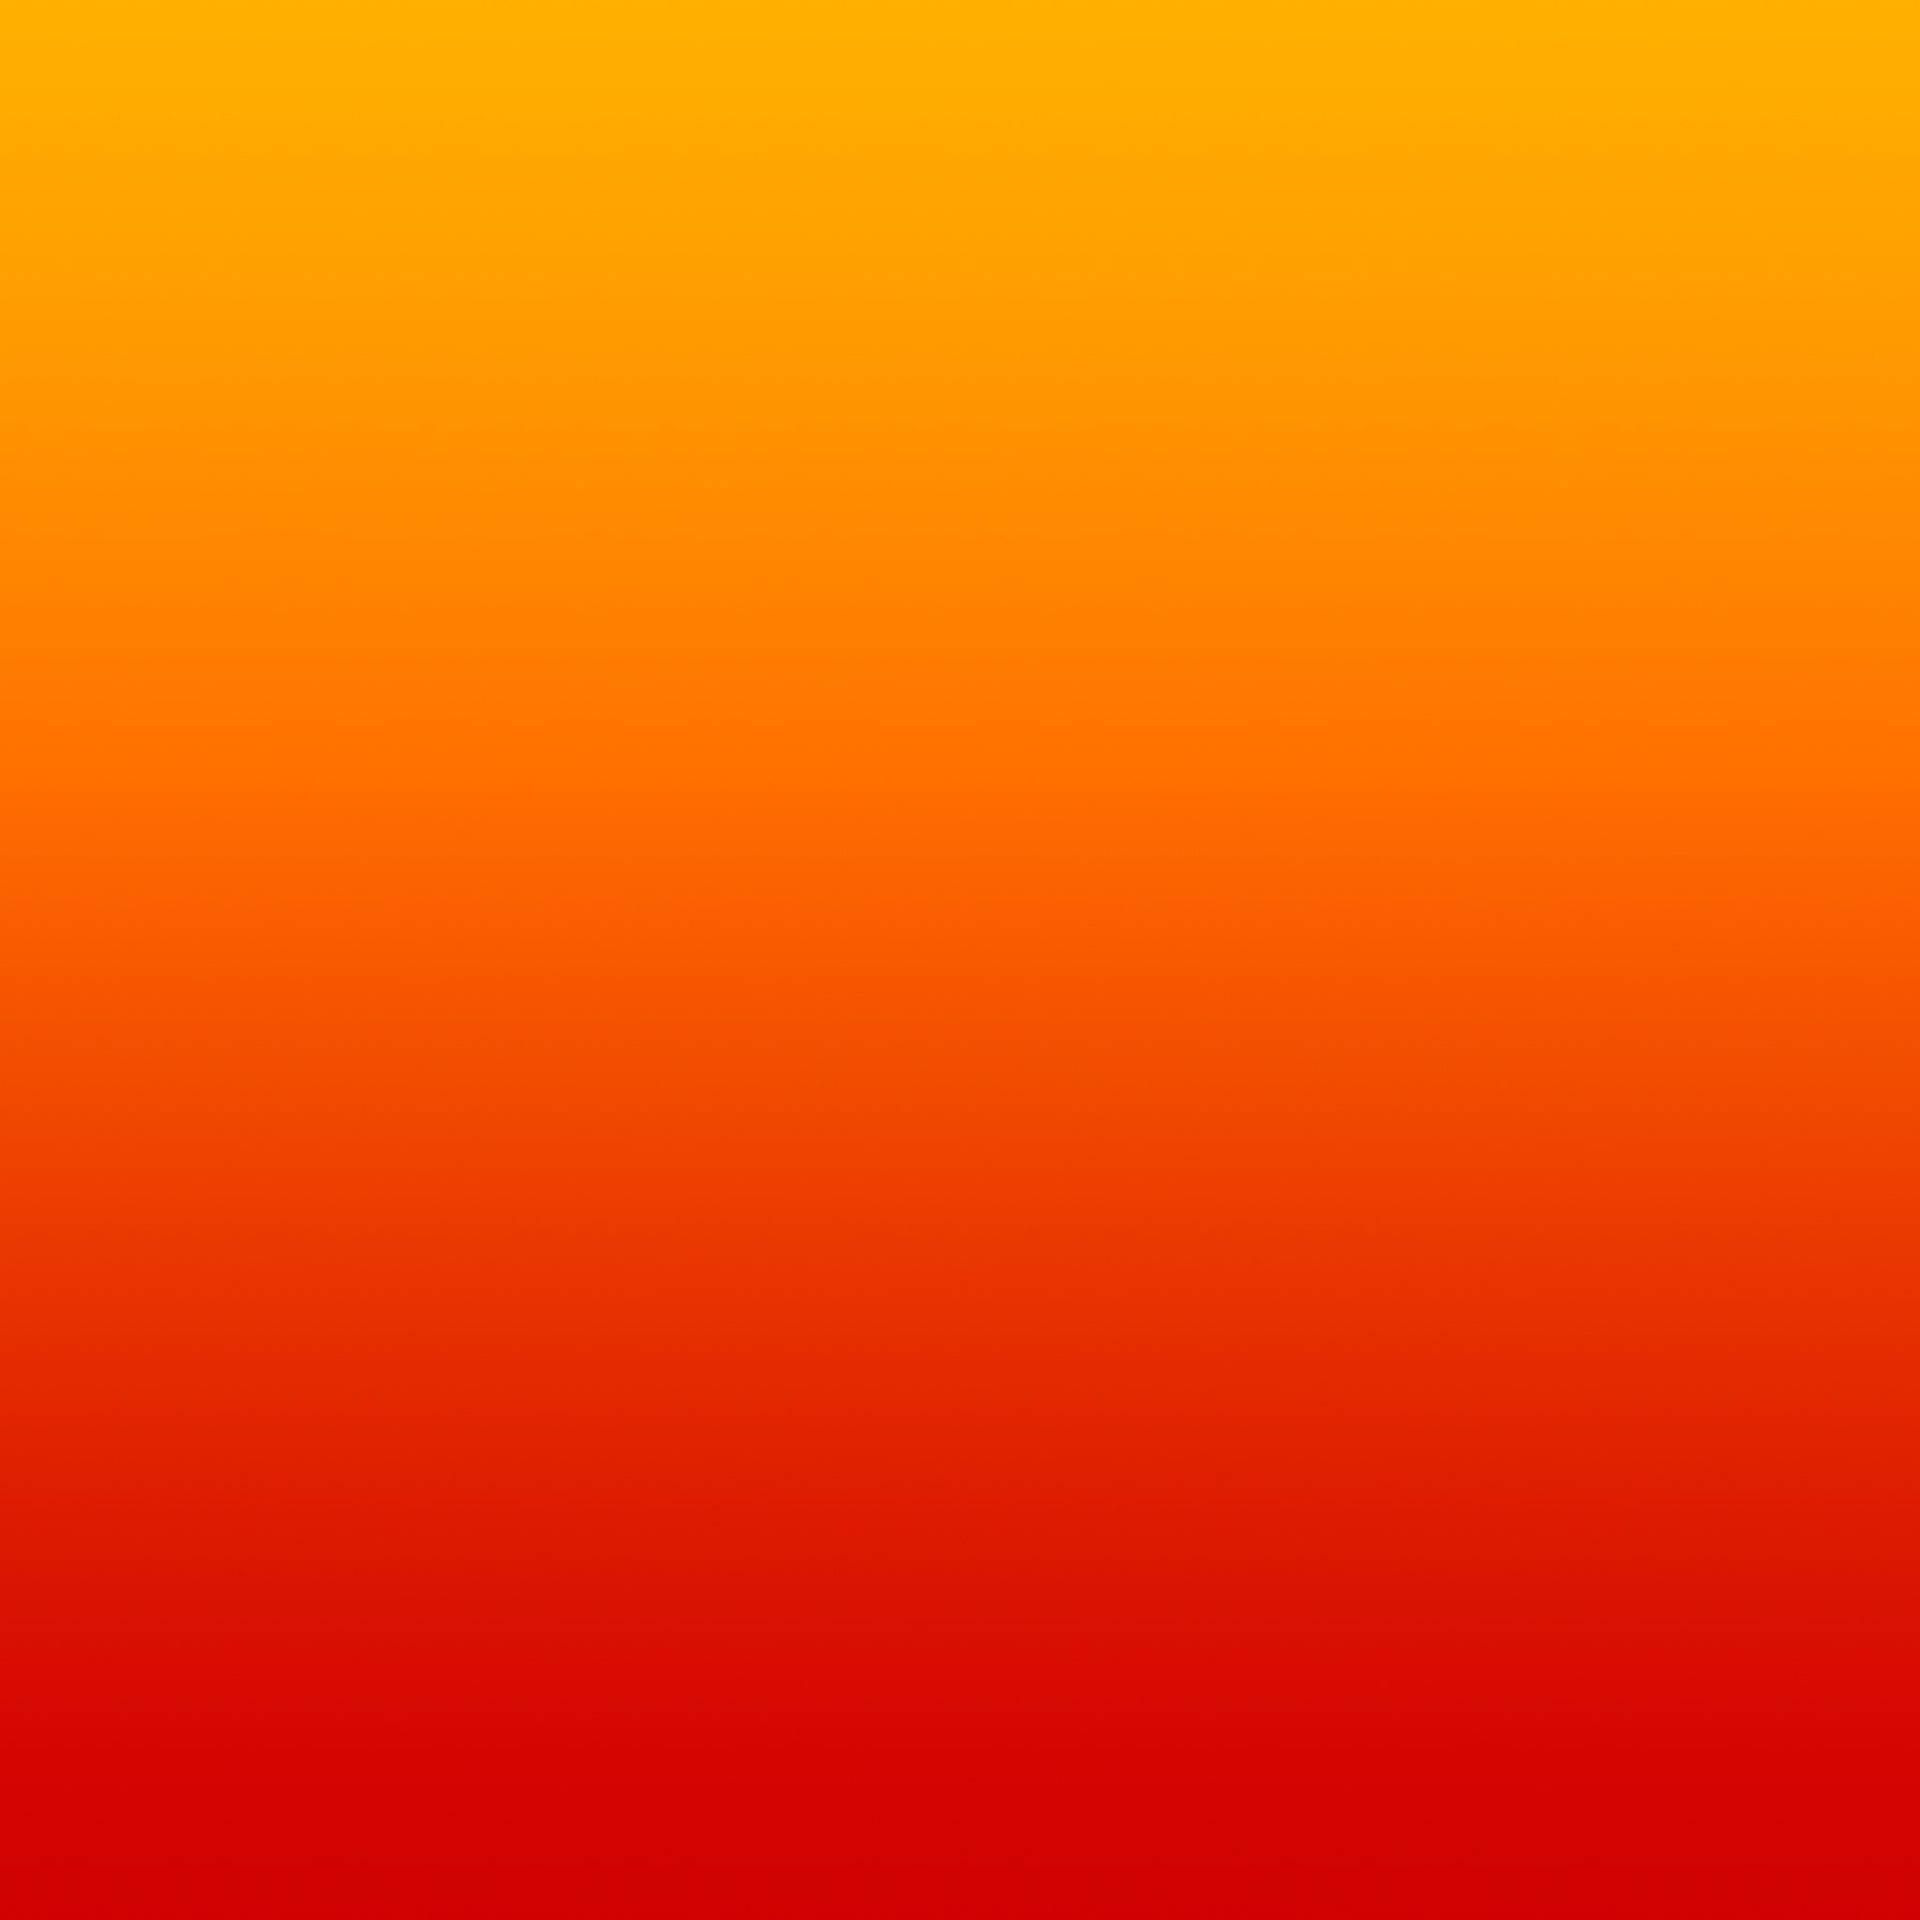 Plain Red Orange Cover Background